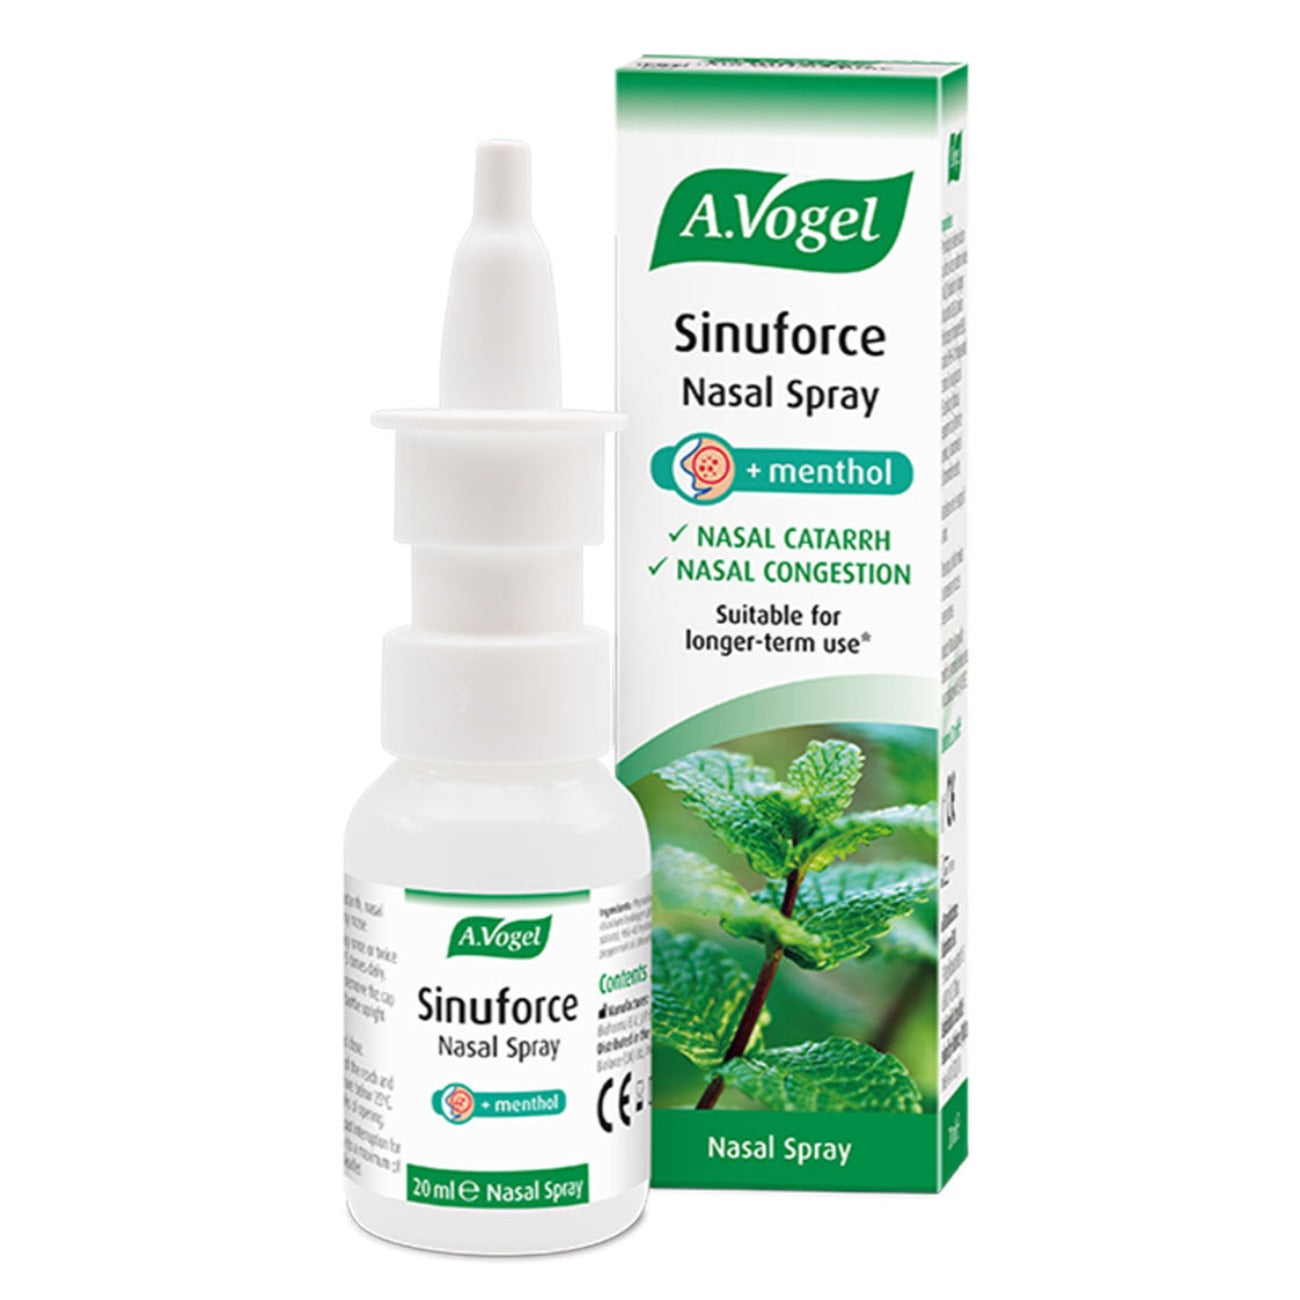 Sinuforce Nasal Spray 20ml